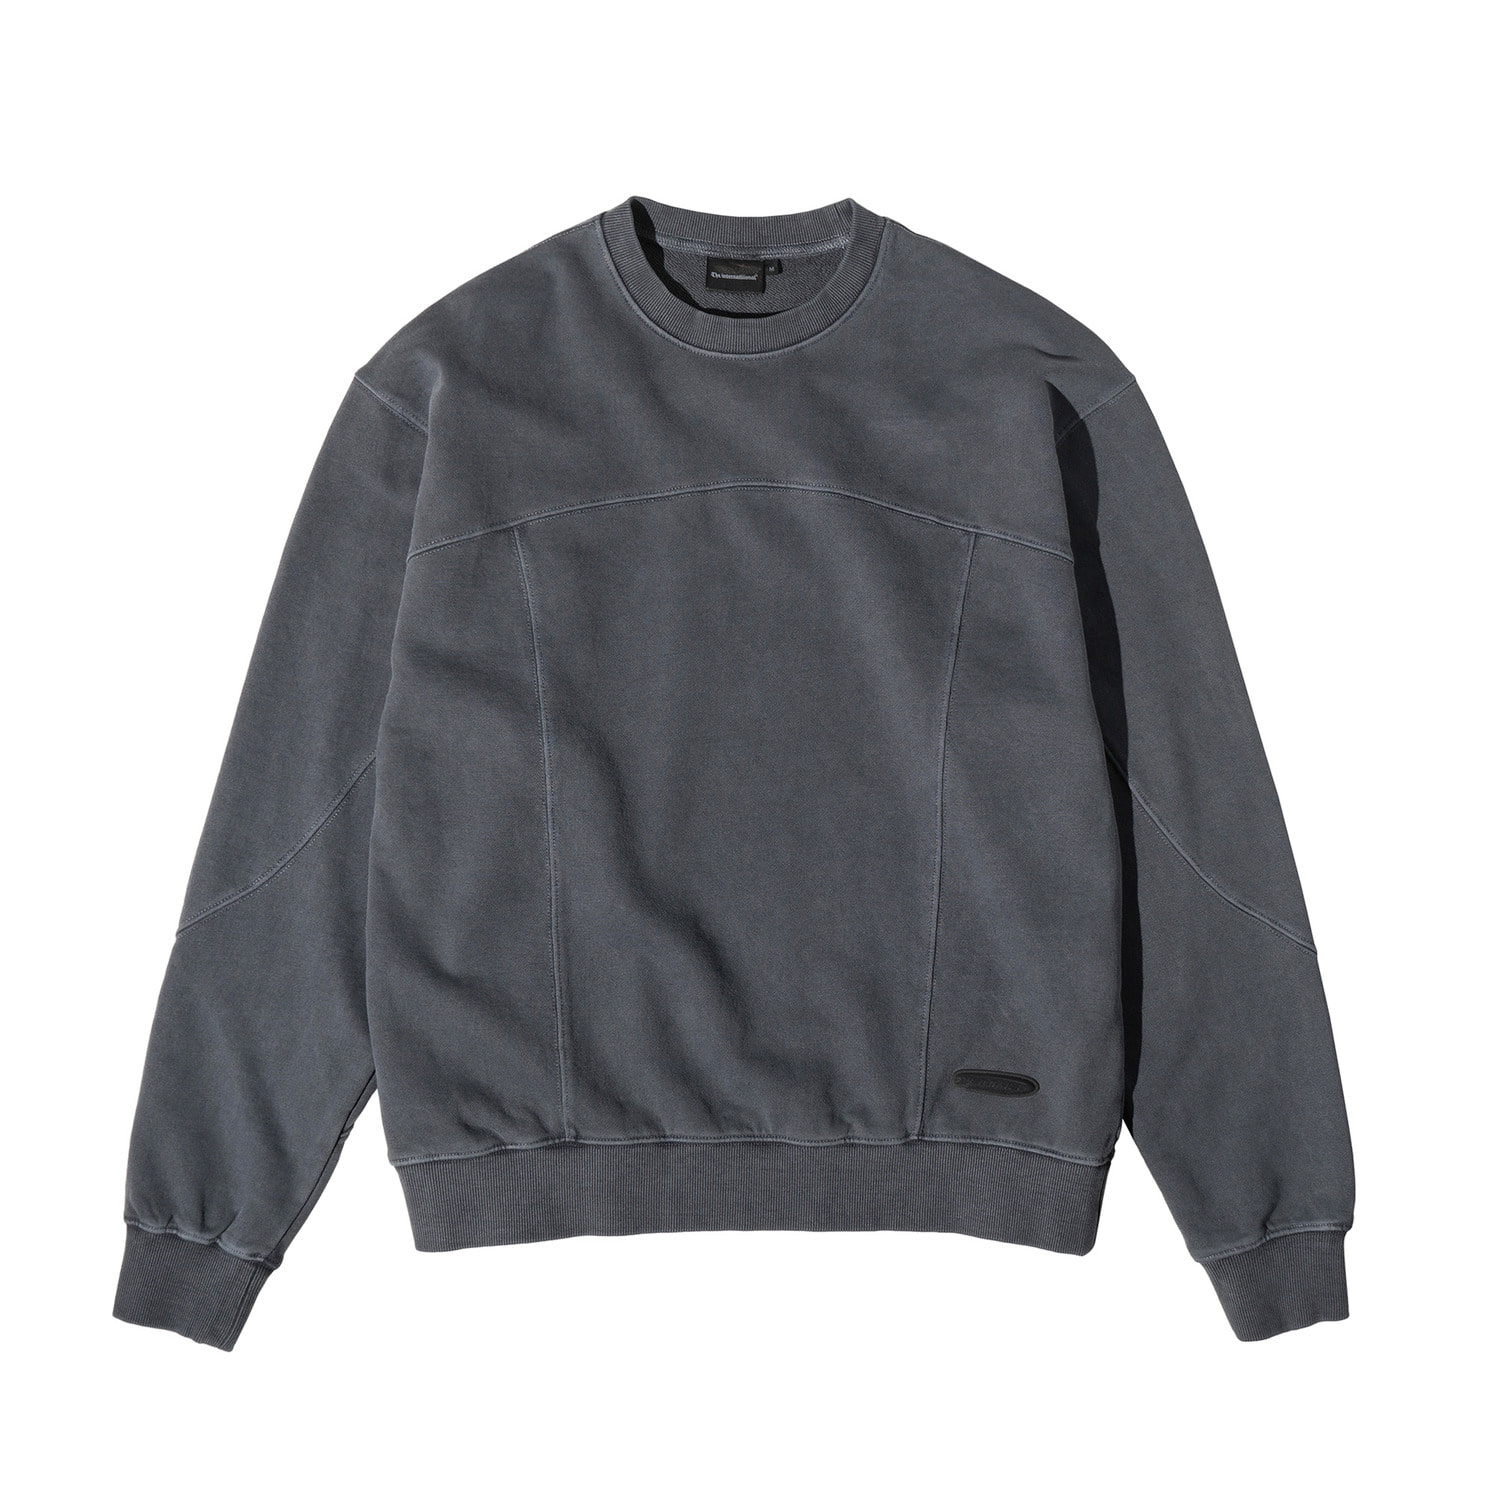 NAX-802 Sweatshirt Charcoal